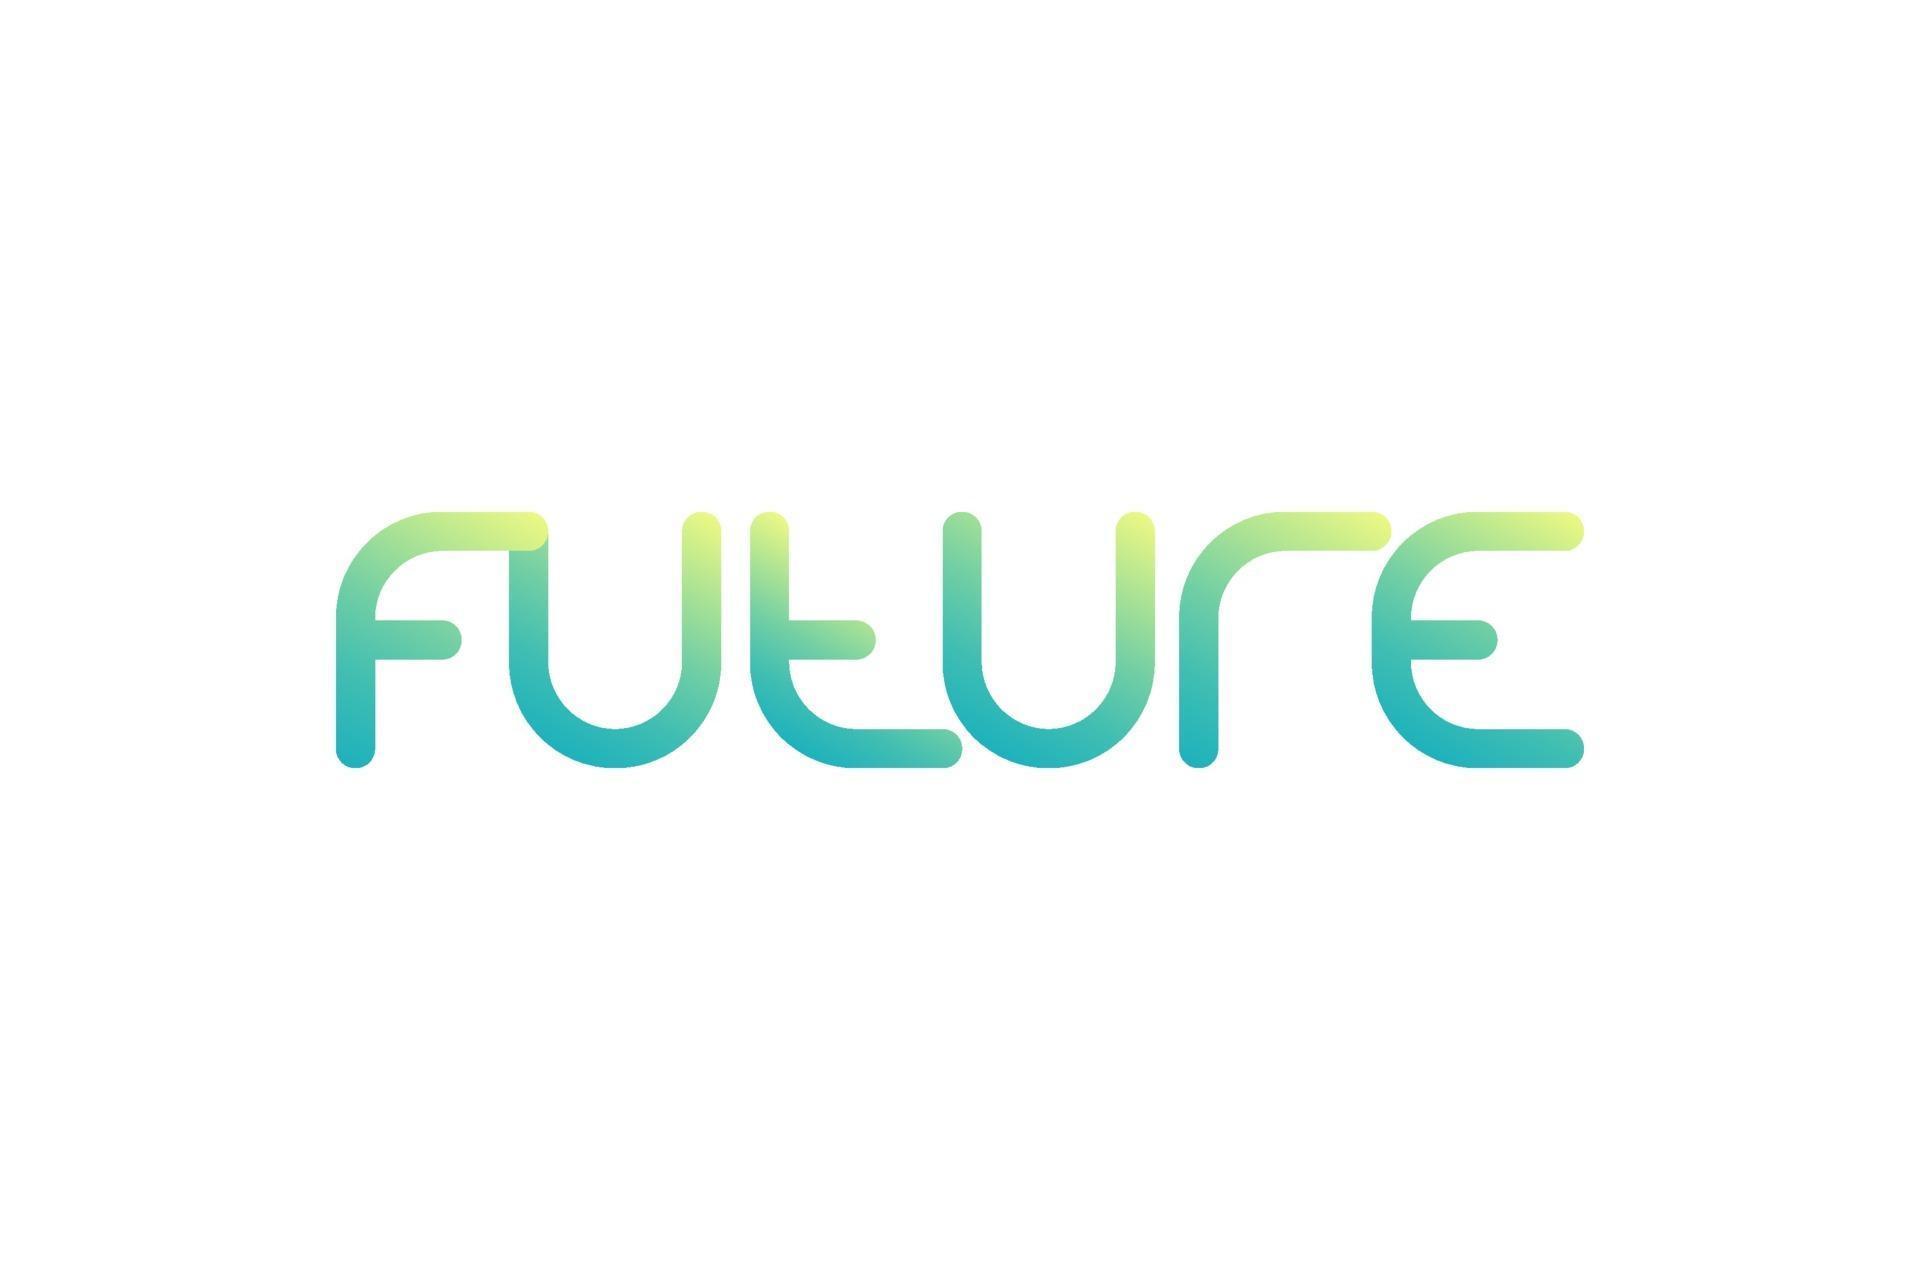 the futur logo presentation